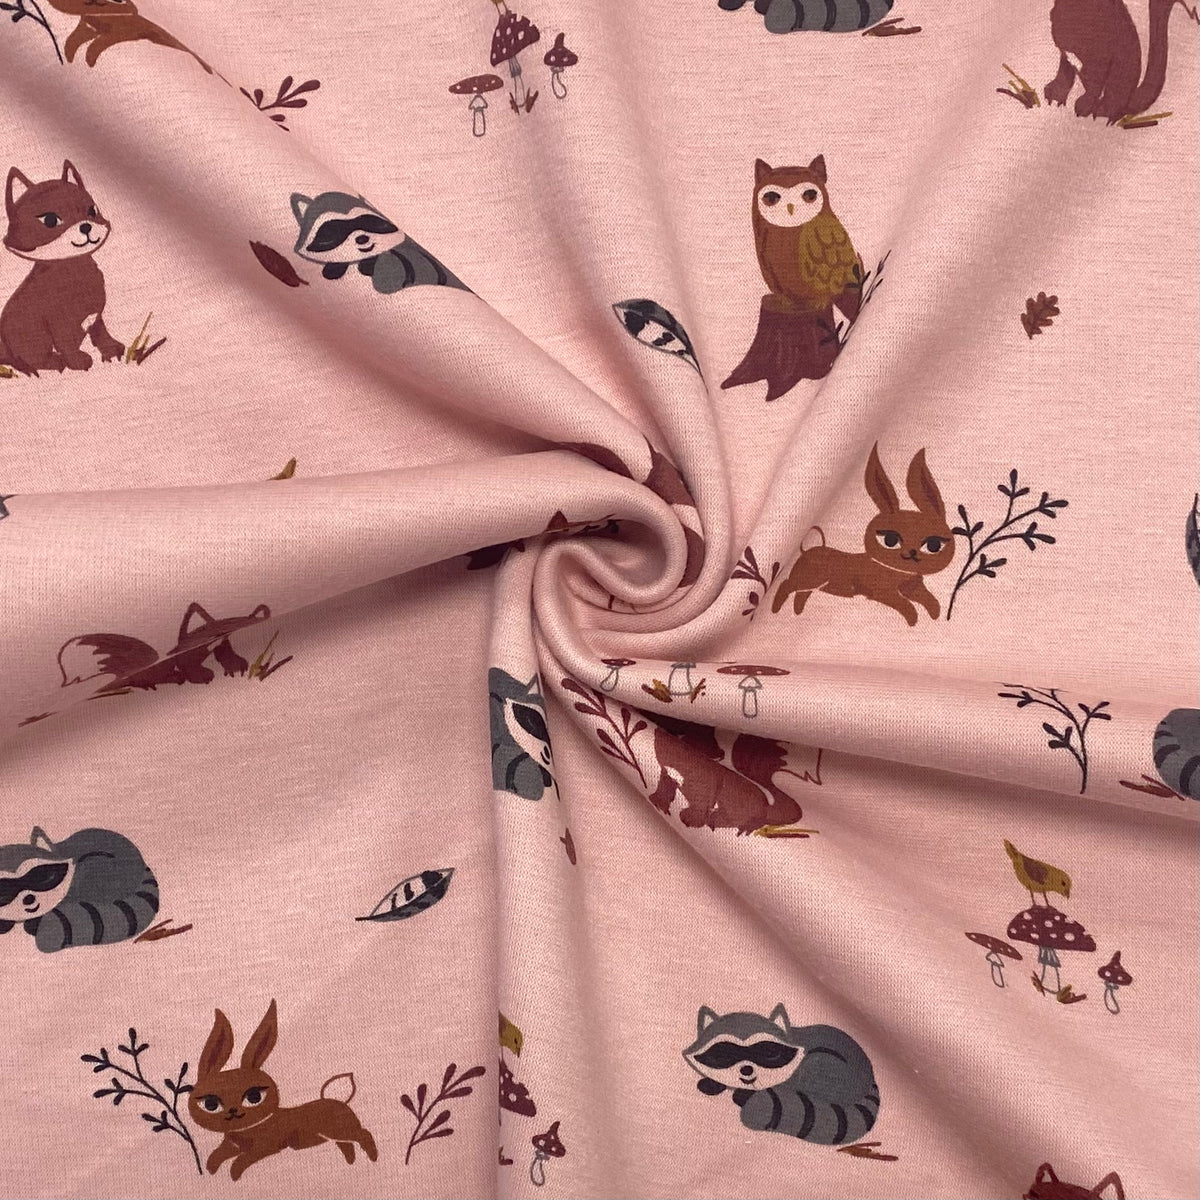 Forest Life on Pink Sweatshirt Fabric